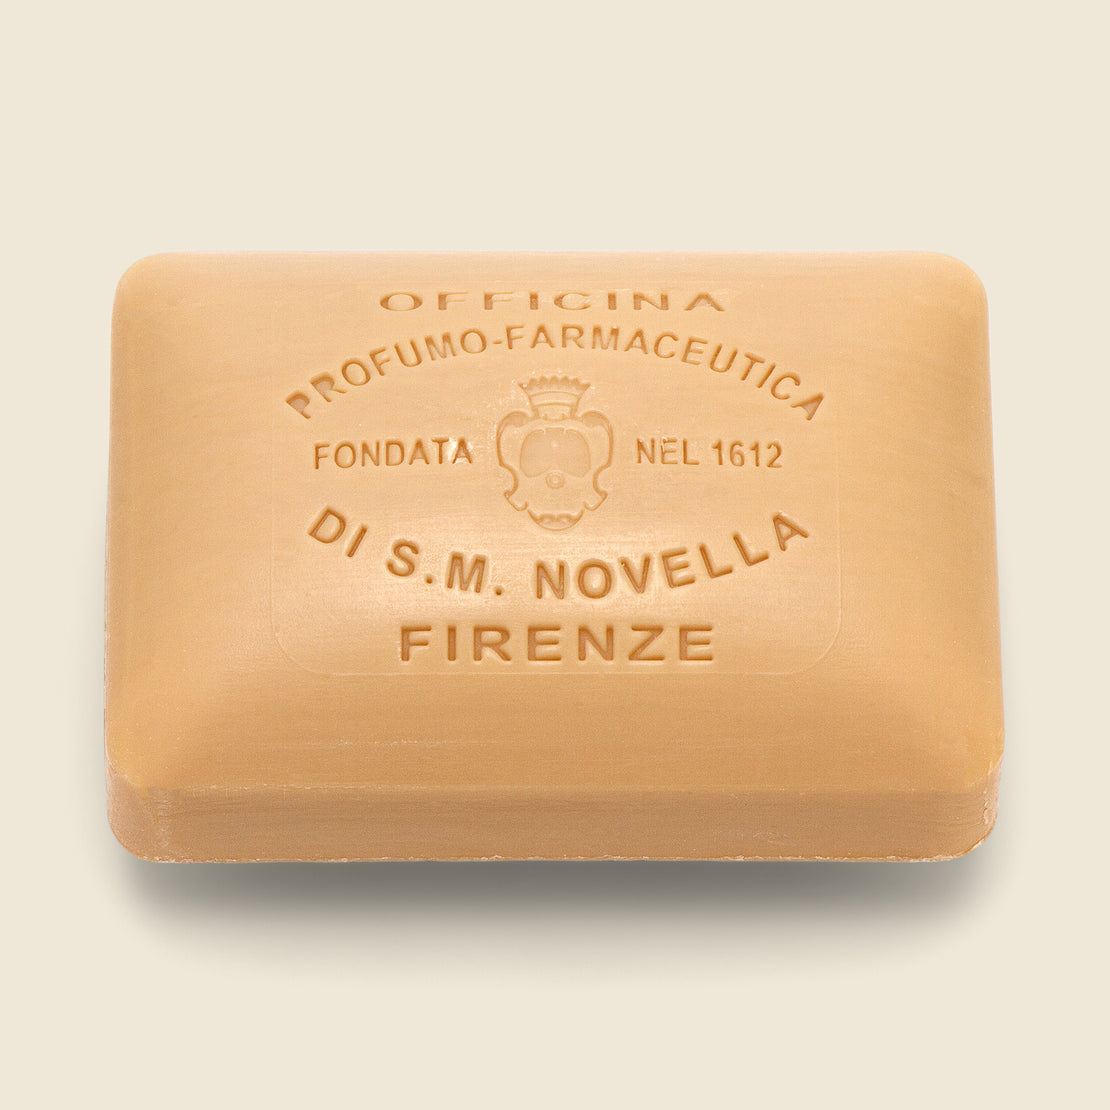 Tabacco Toscano Hand Soap - Santa Maria Novella - STAG Provisions - Home - Chemist - Skin Care